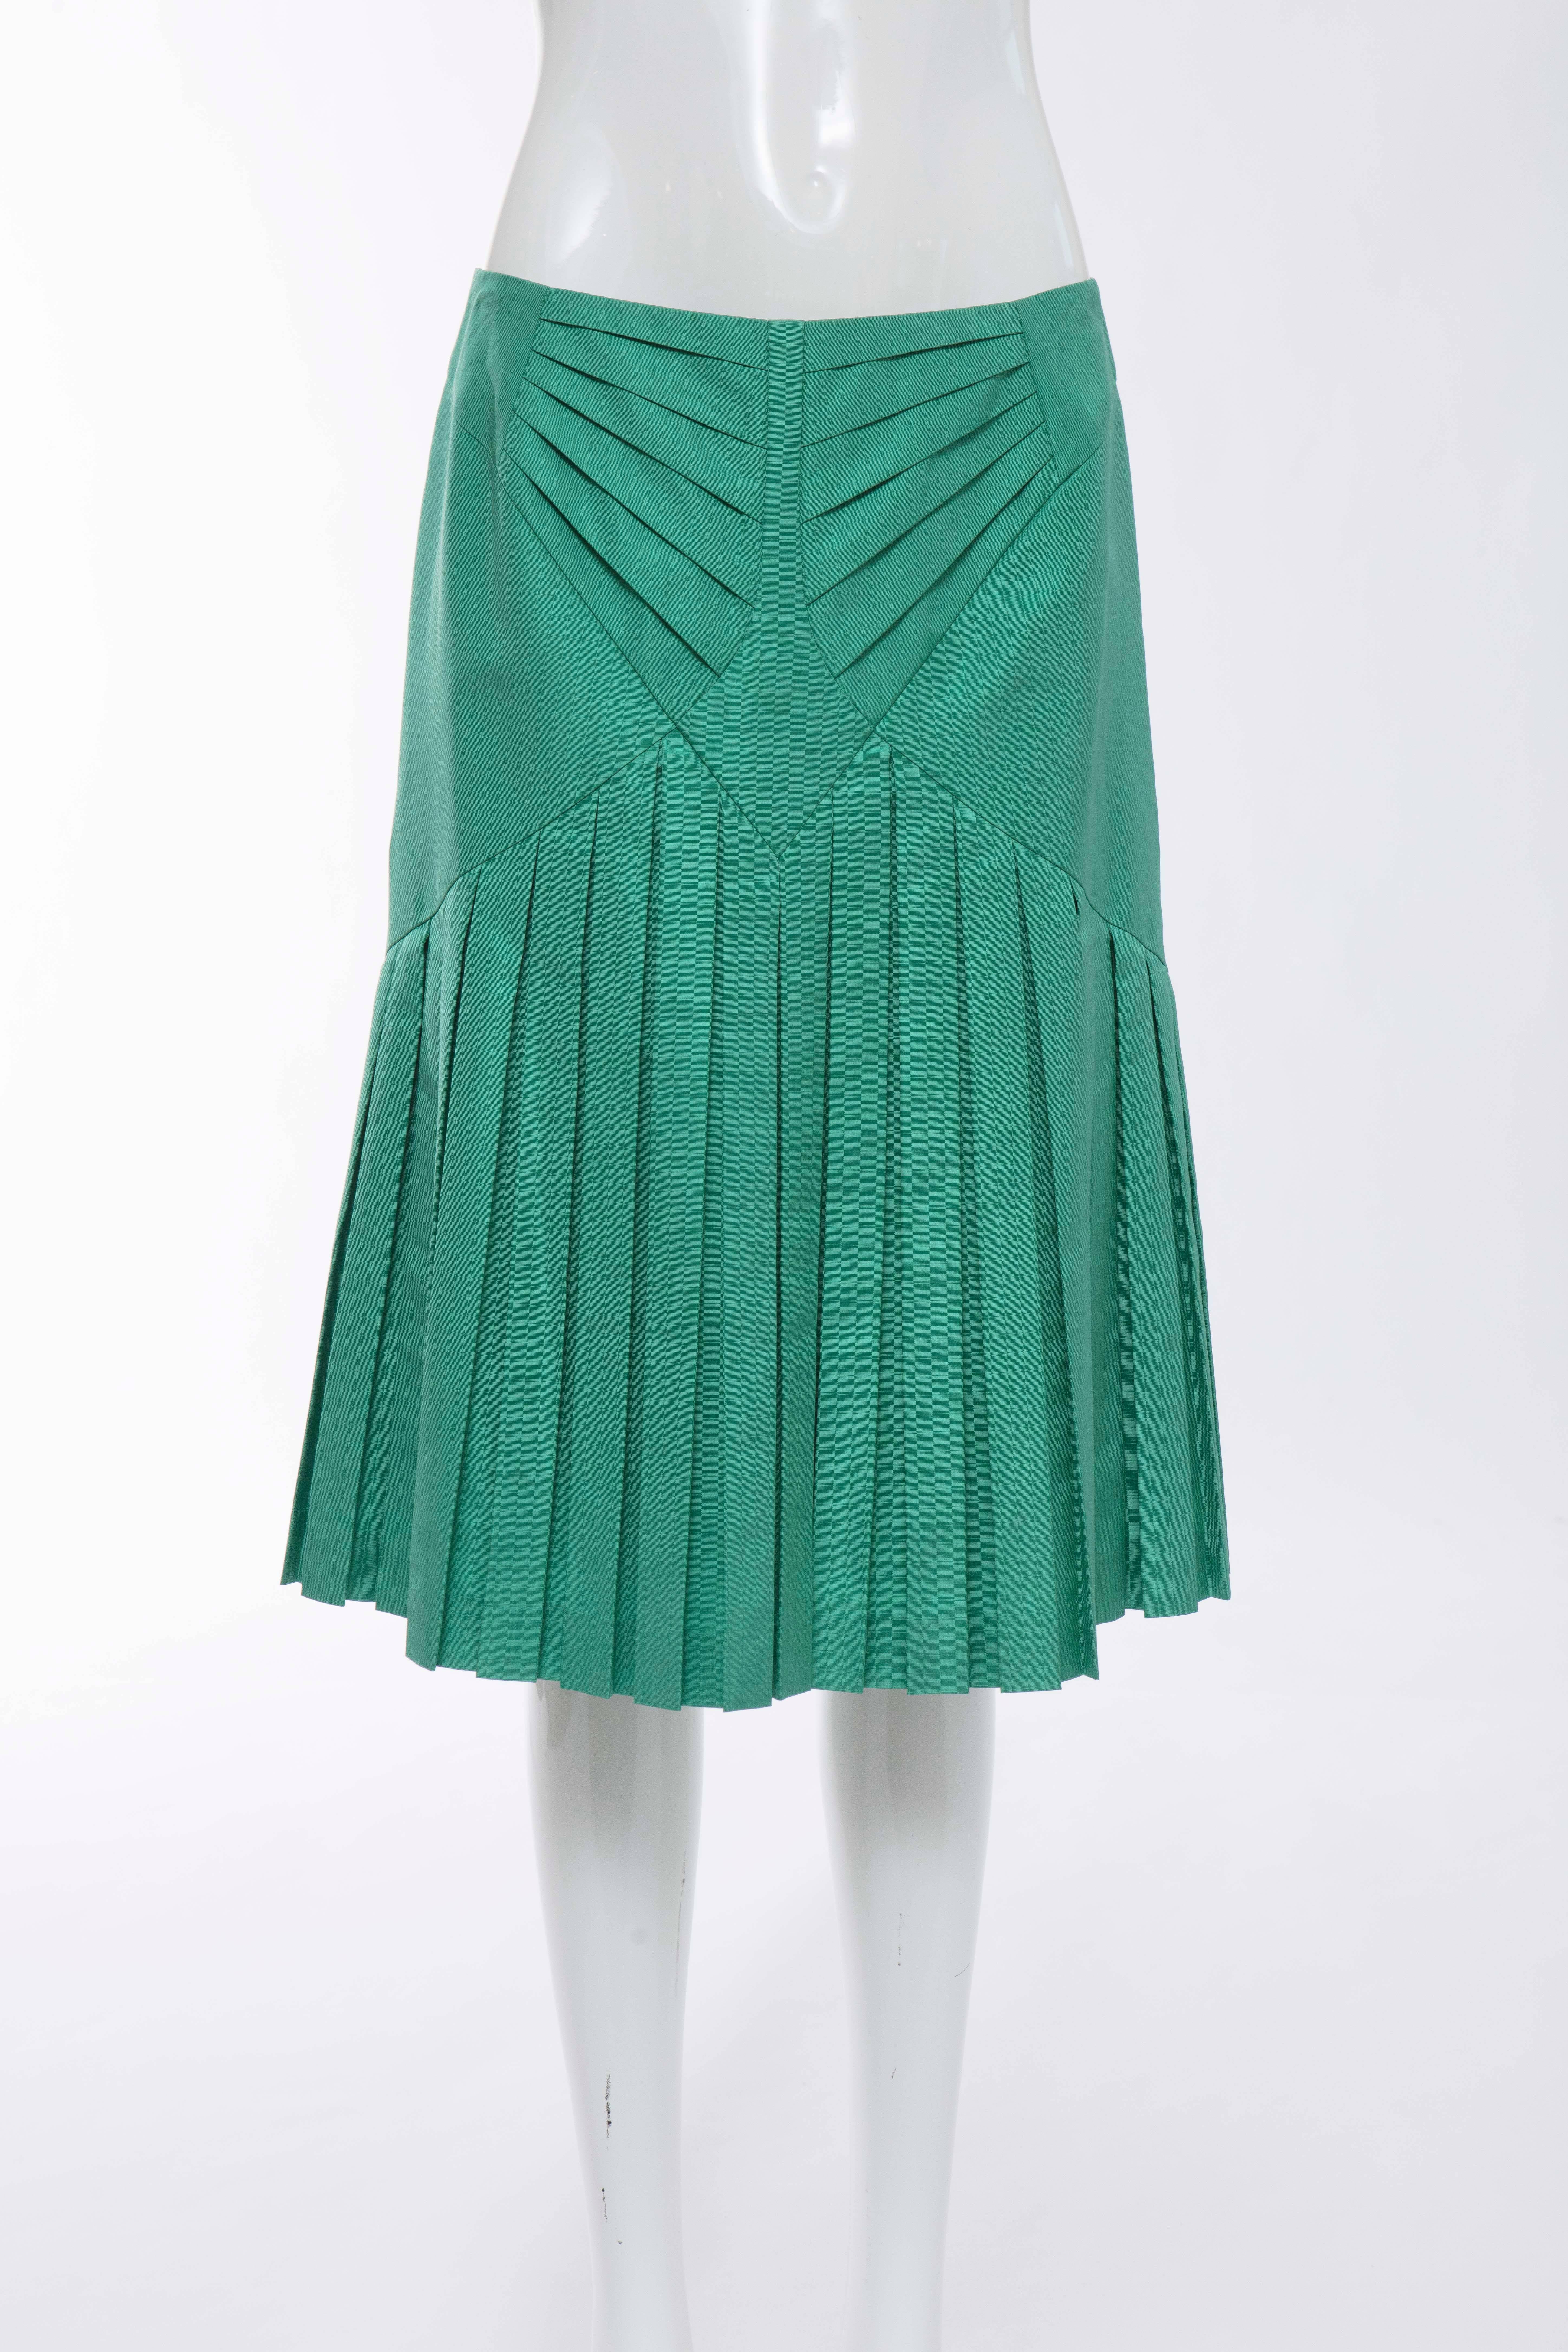 Zac Posen Green Silk Moiré Pleated Skirt Suit, Fall 2005 For Sale 4